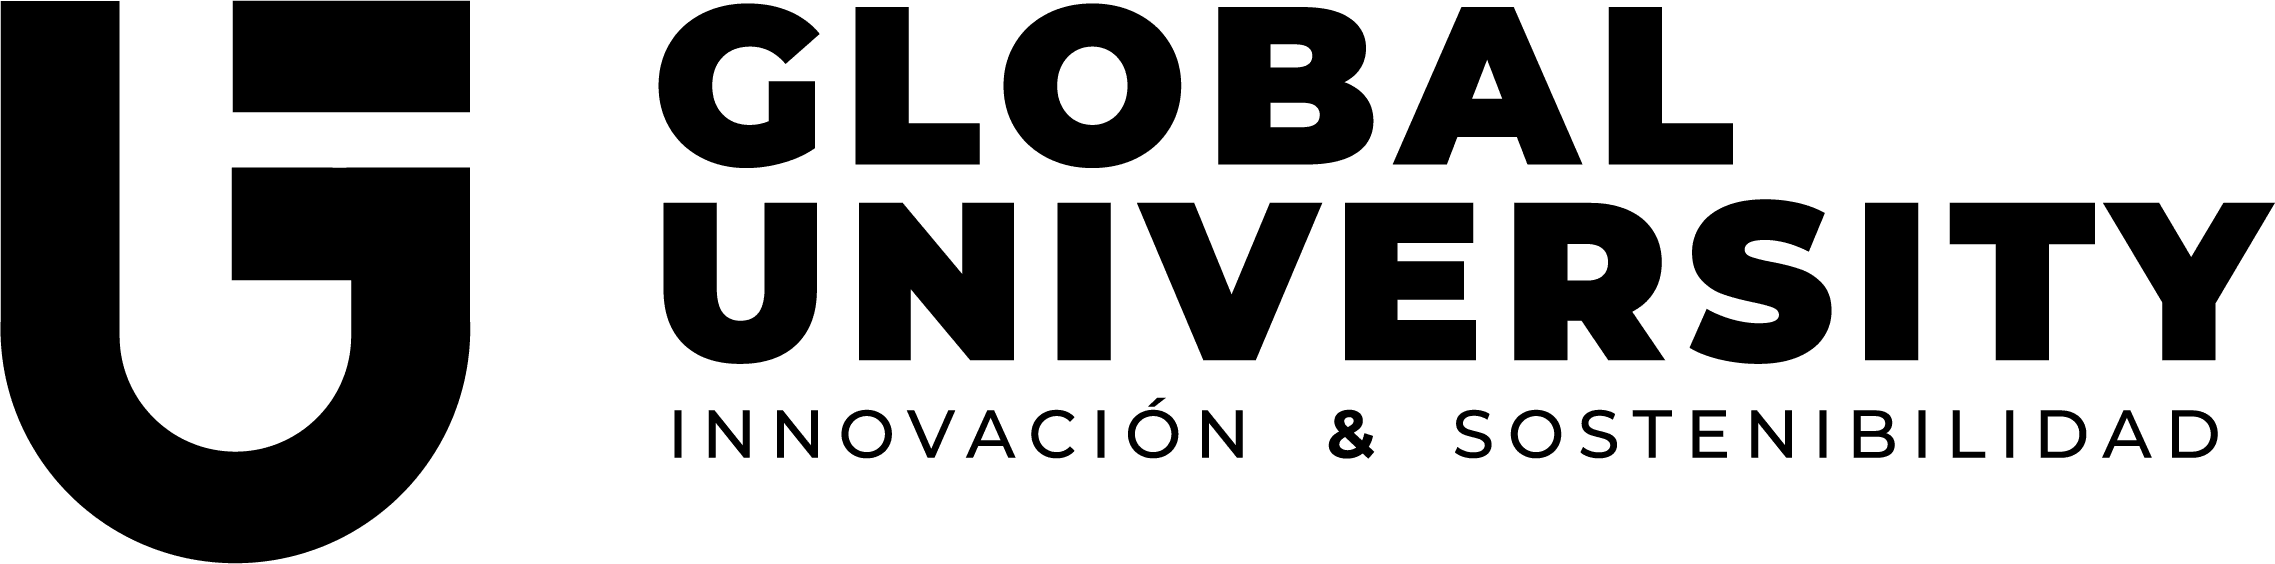 Logos_Global_University-02